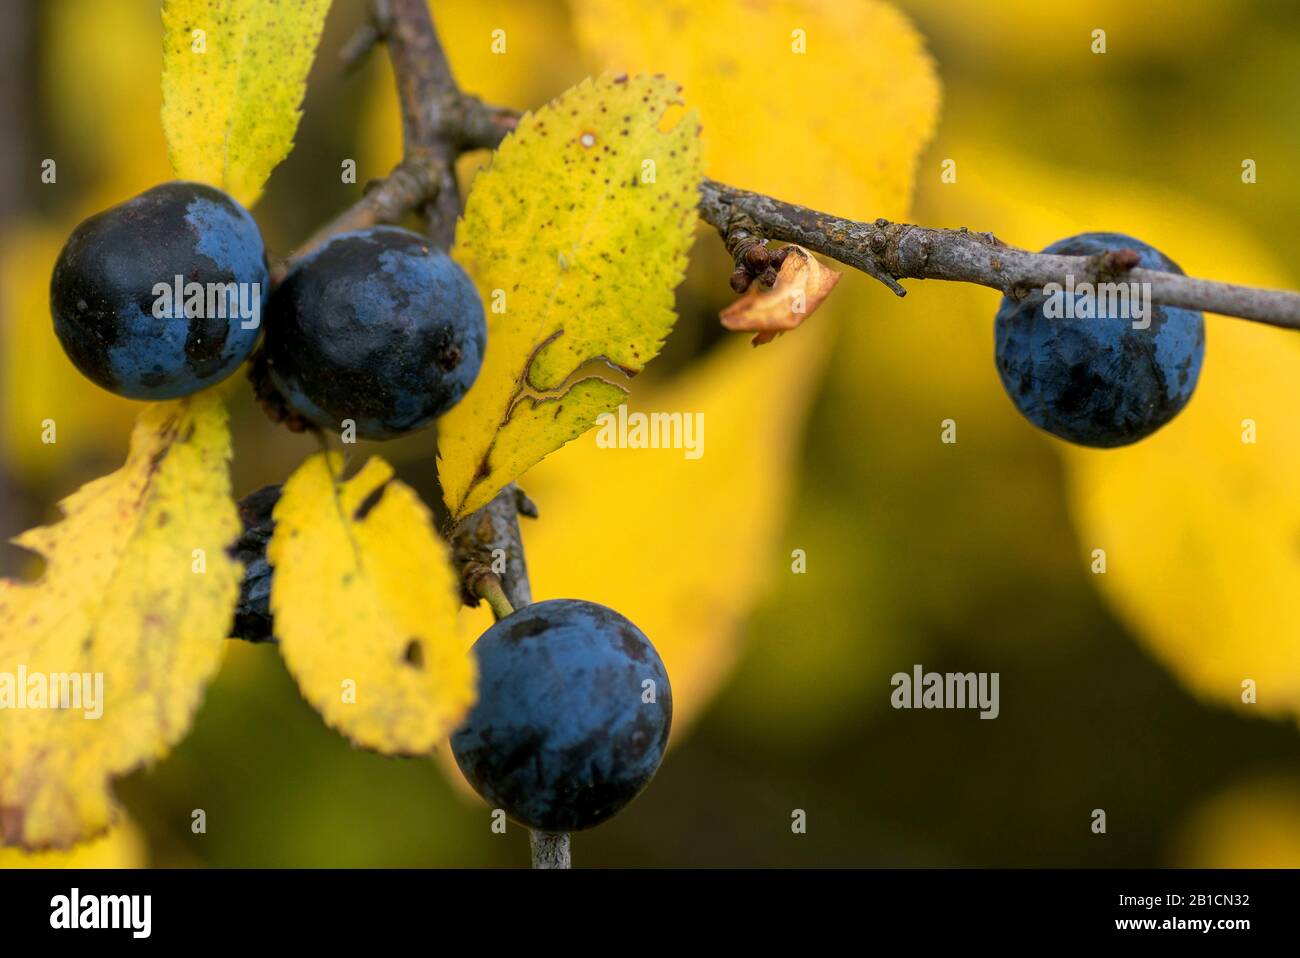 blackthorn, sloe (Prunus spinosa), fruits and autumn leaves, Germany, Bavaria Stock Photo